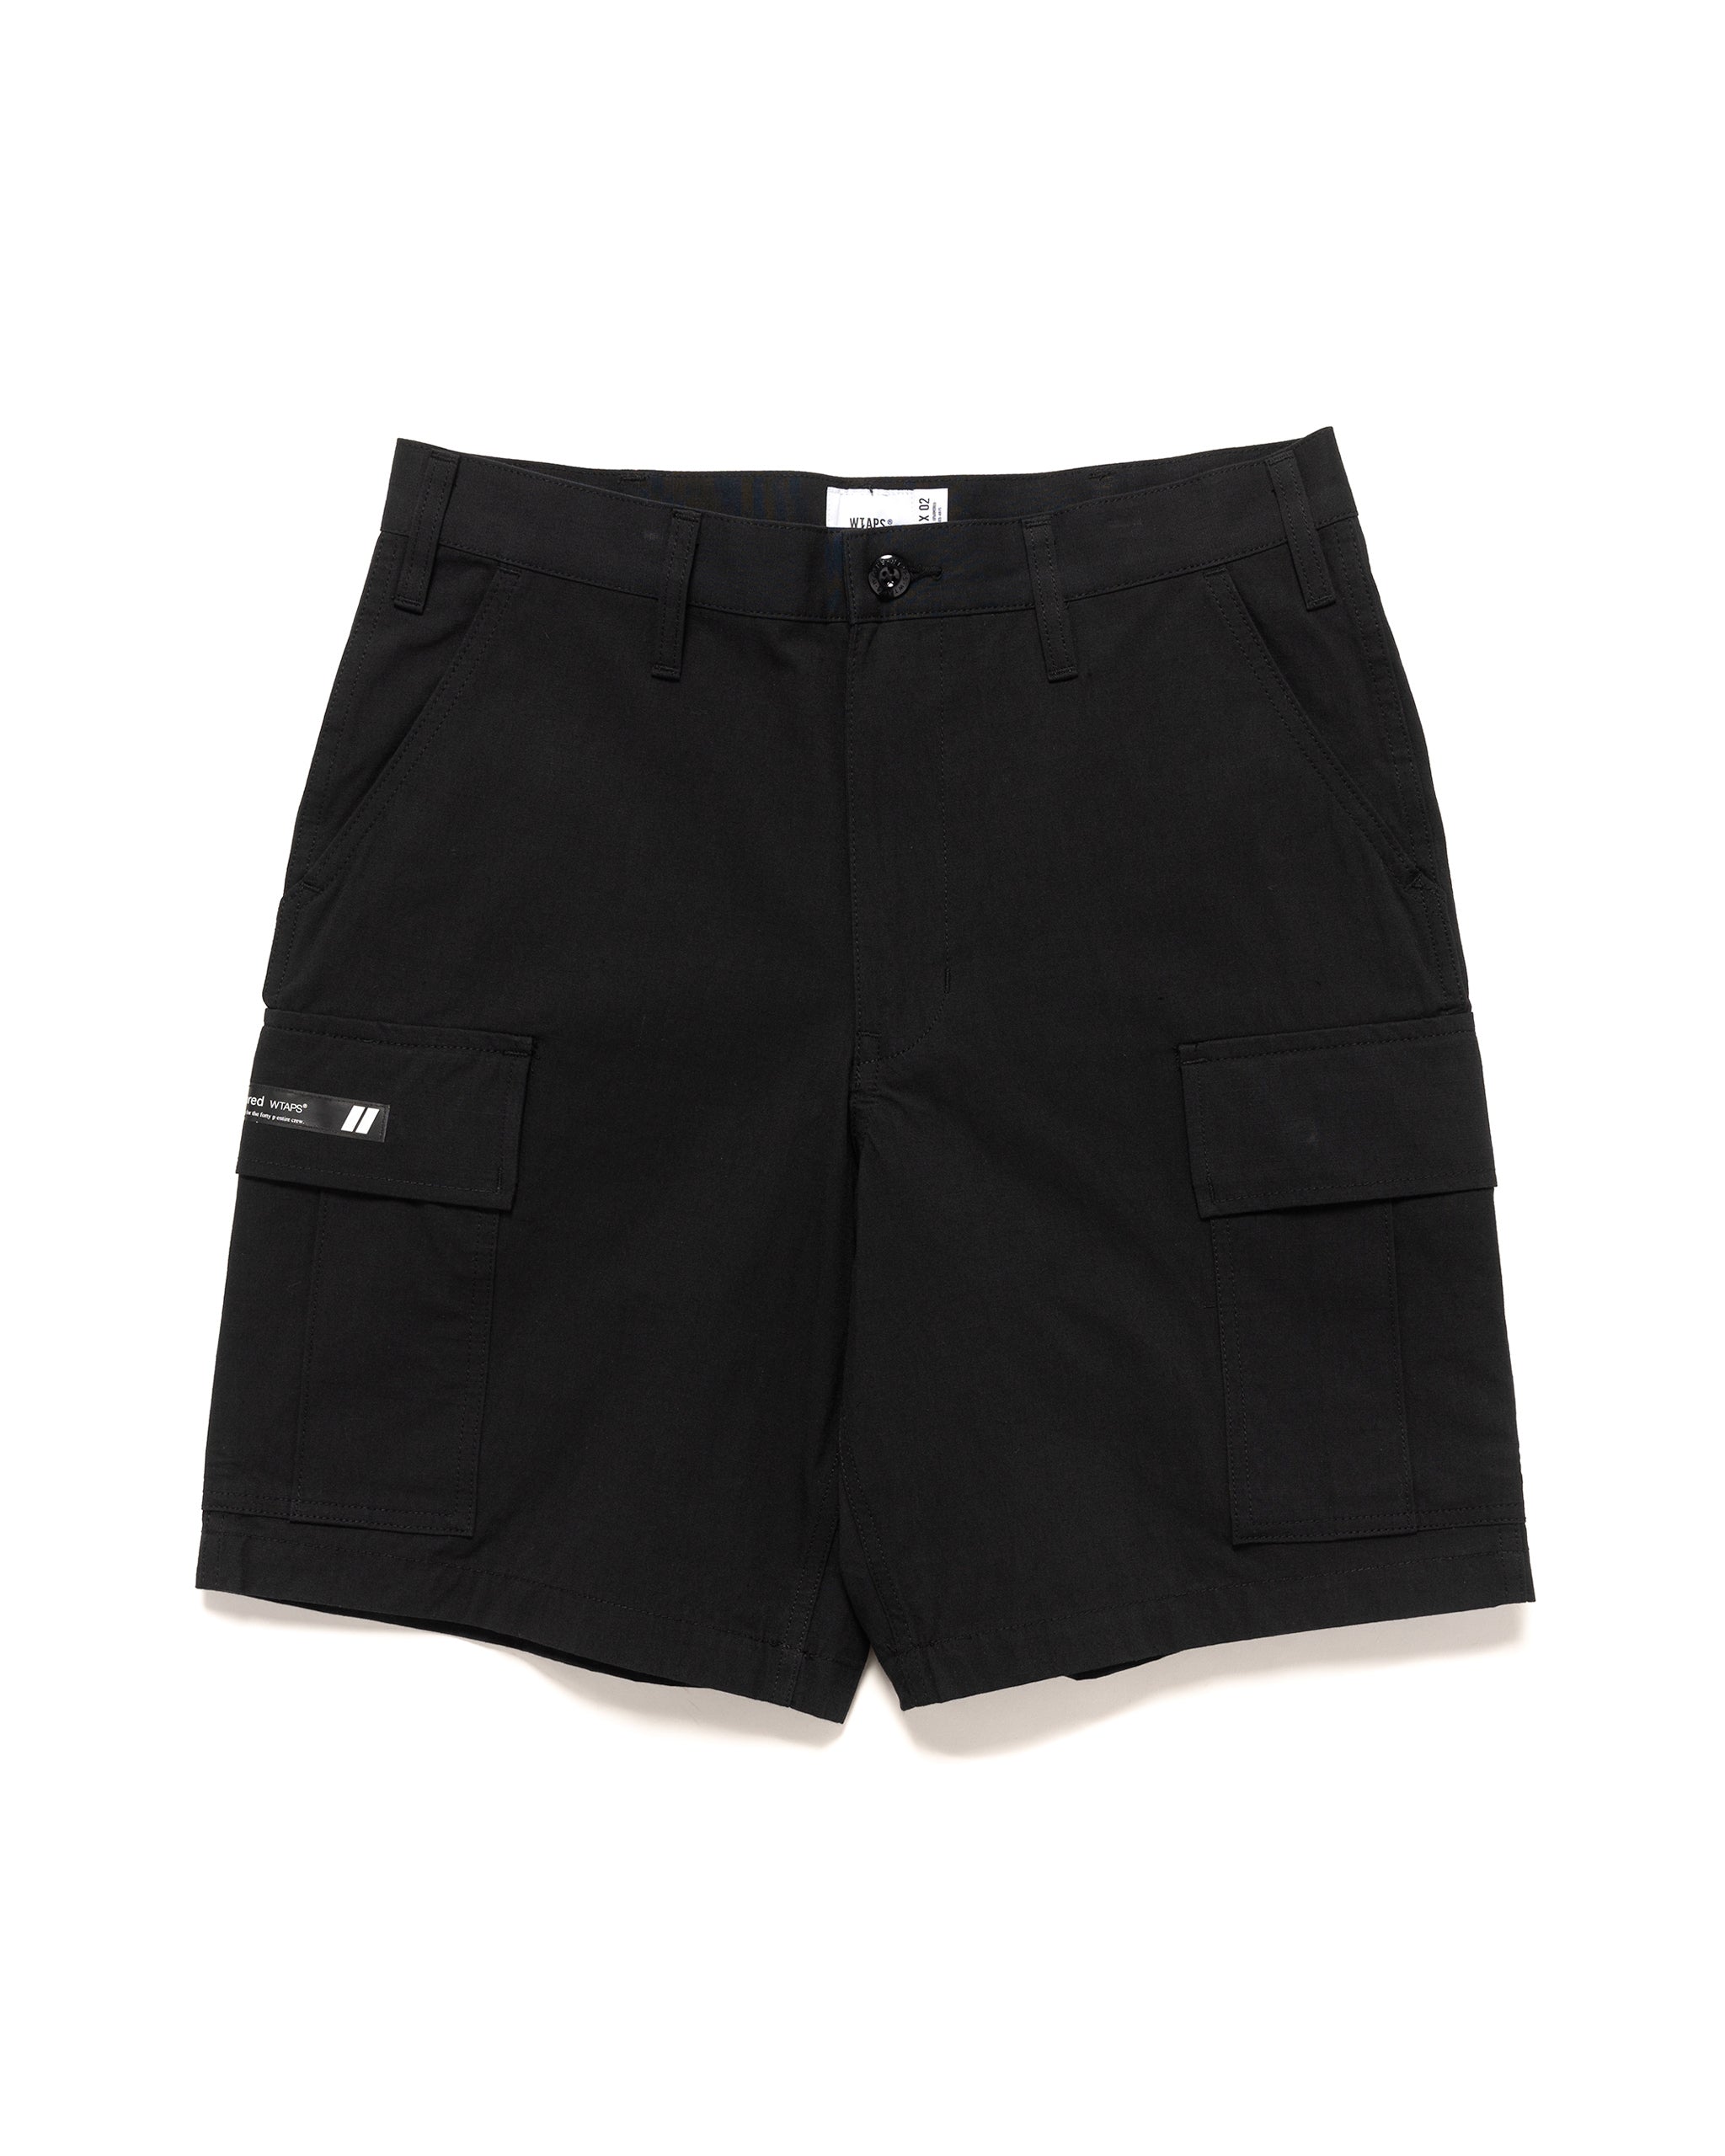 MILS9601 / Shorts / Nyco. Ripstop Black